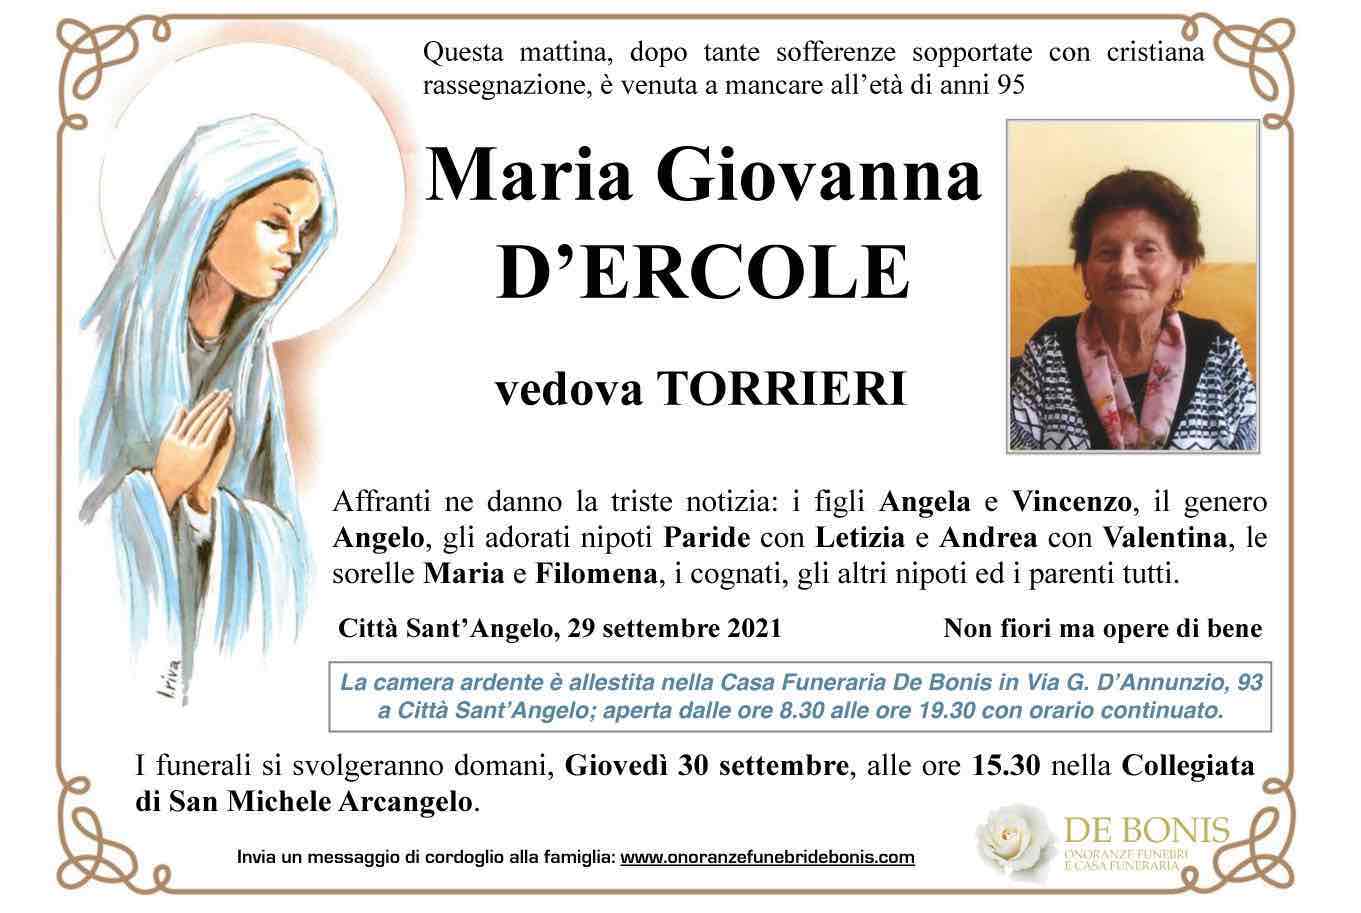 Maria Giovanna D'Ercole